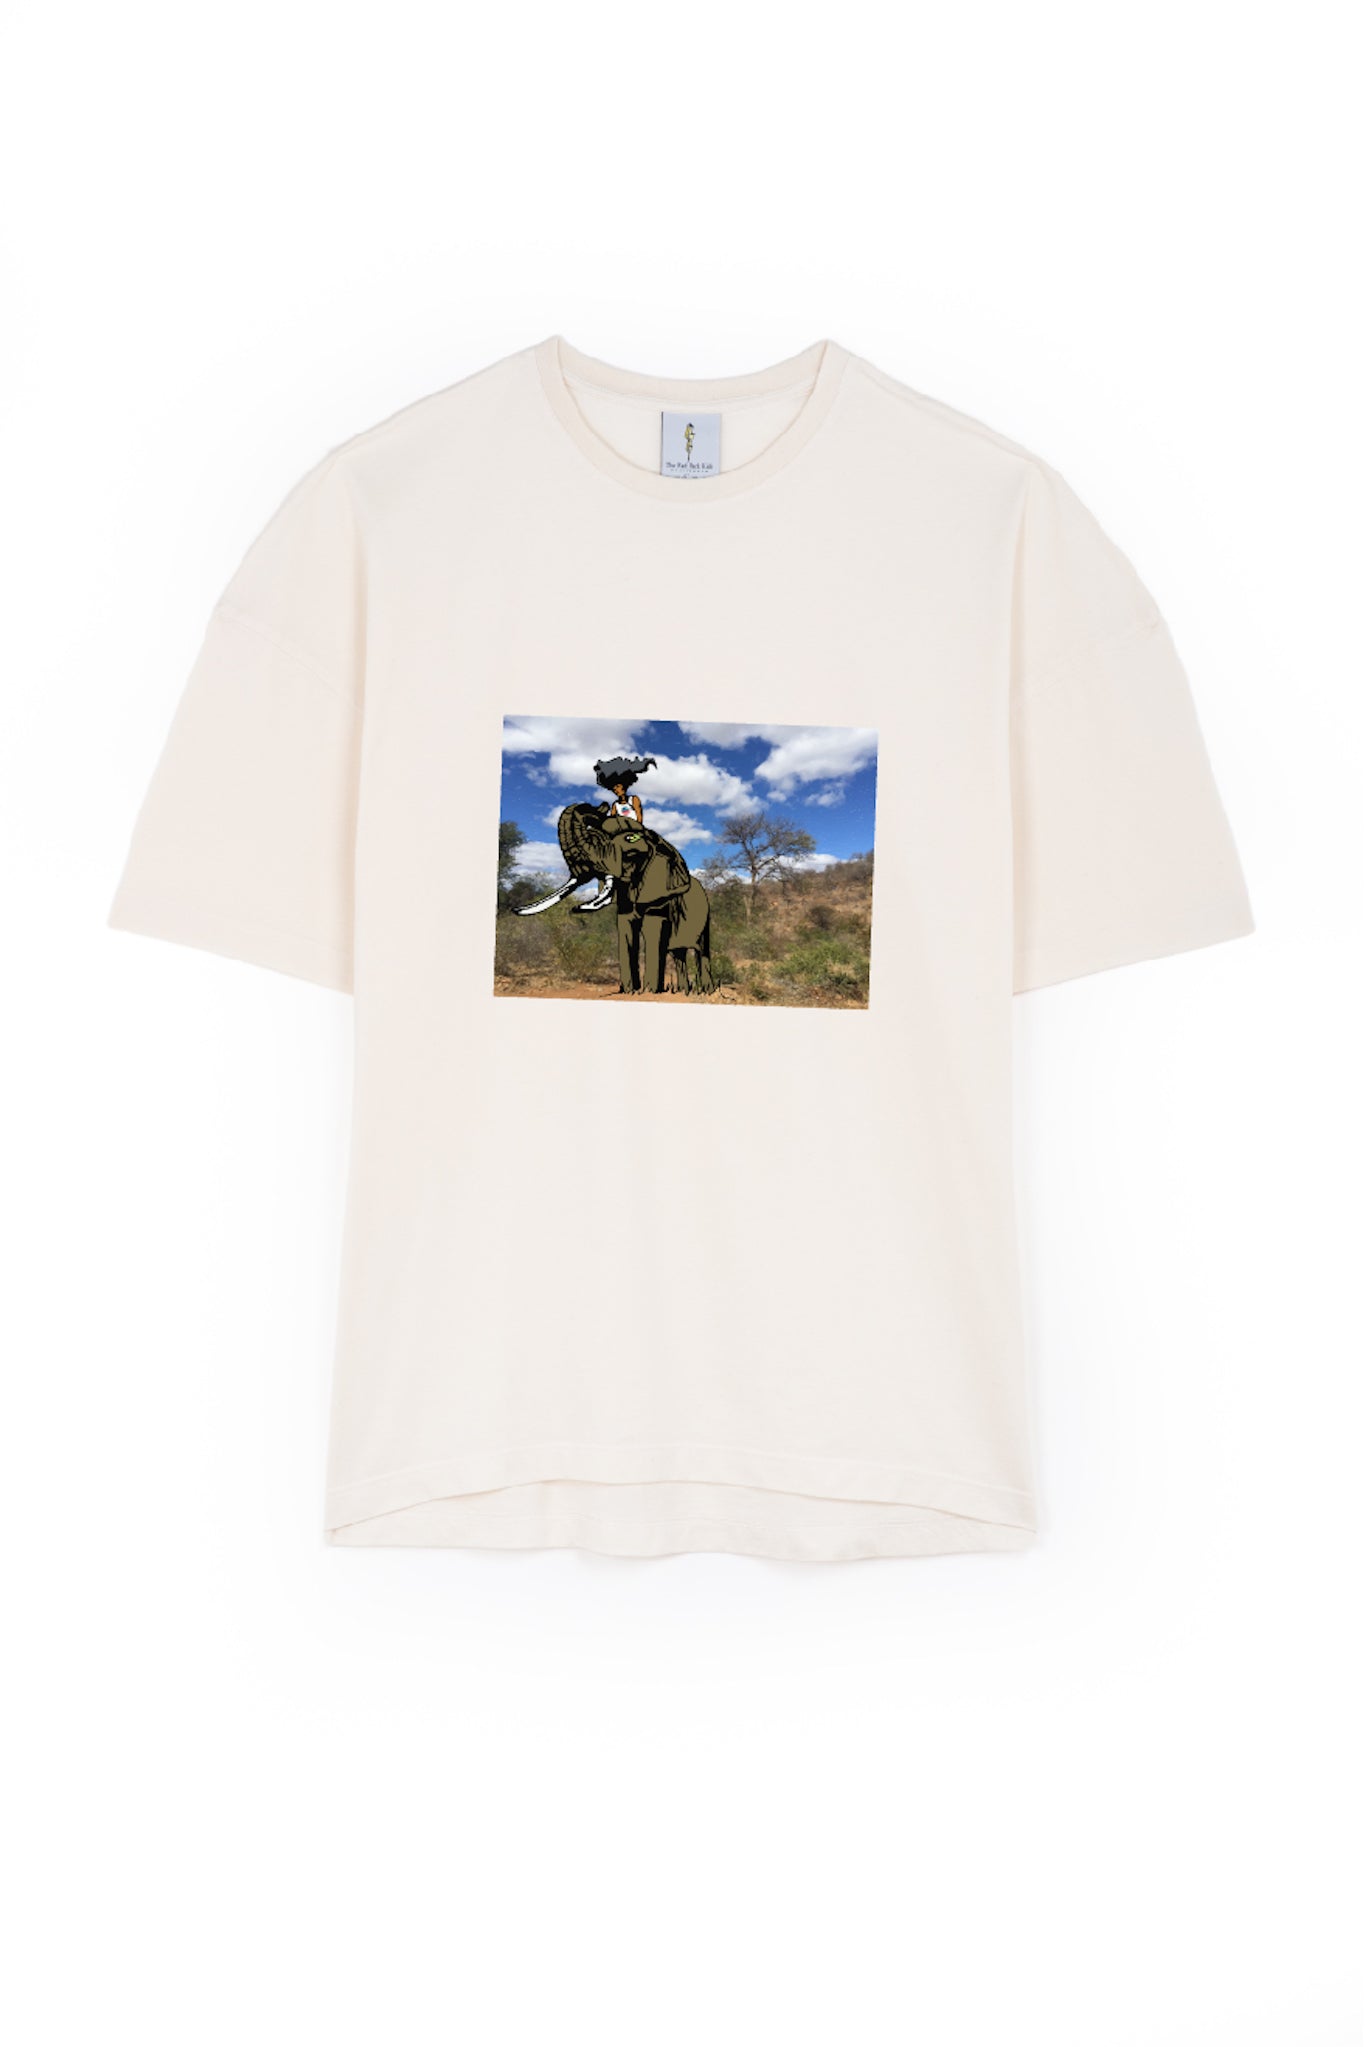 Xasuke Rides t-Shirt